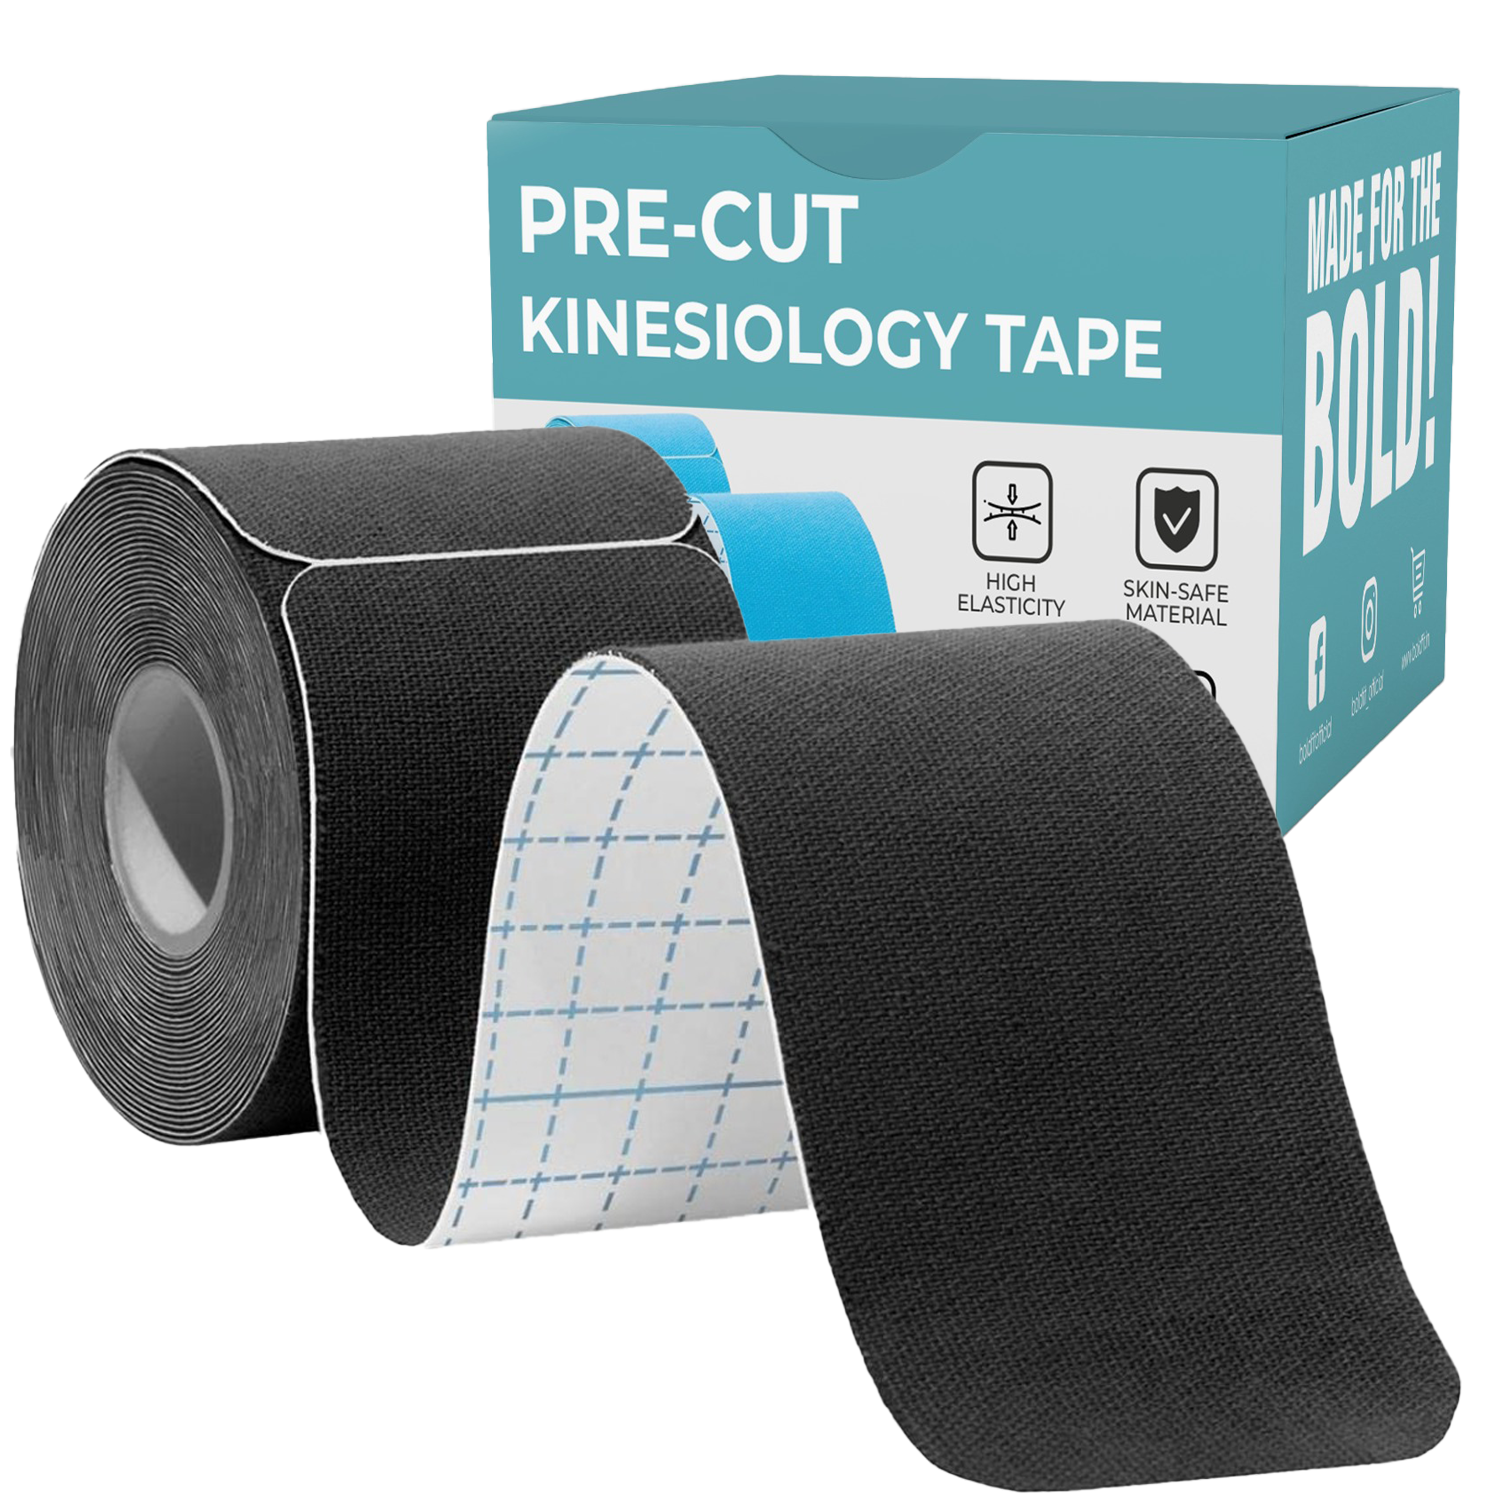 Precut Kinesiology Tape